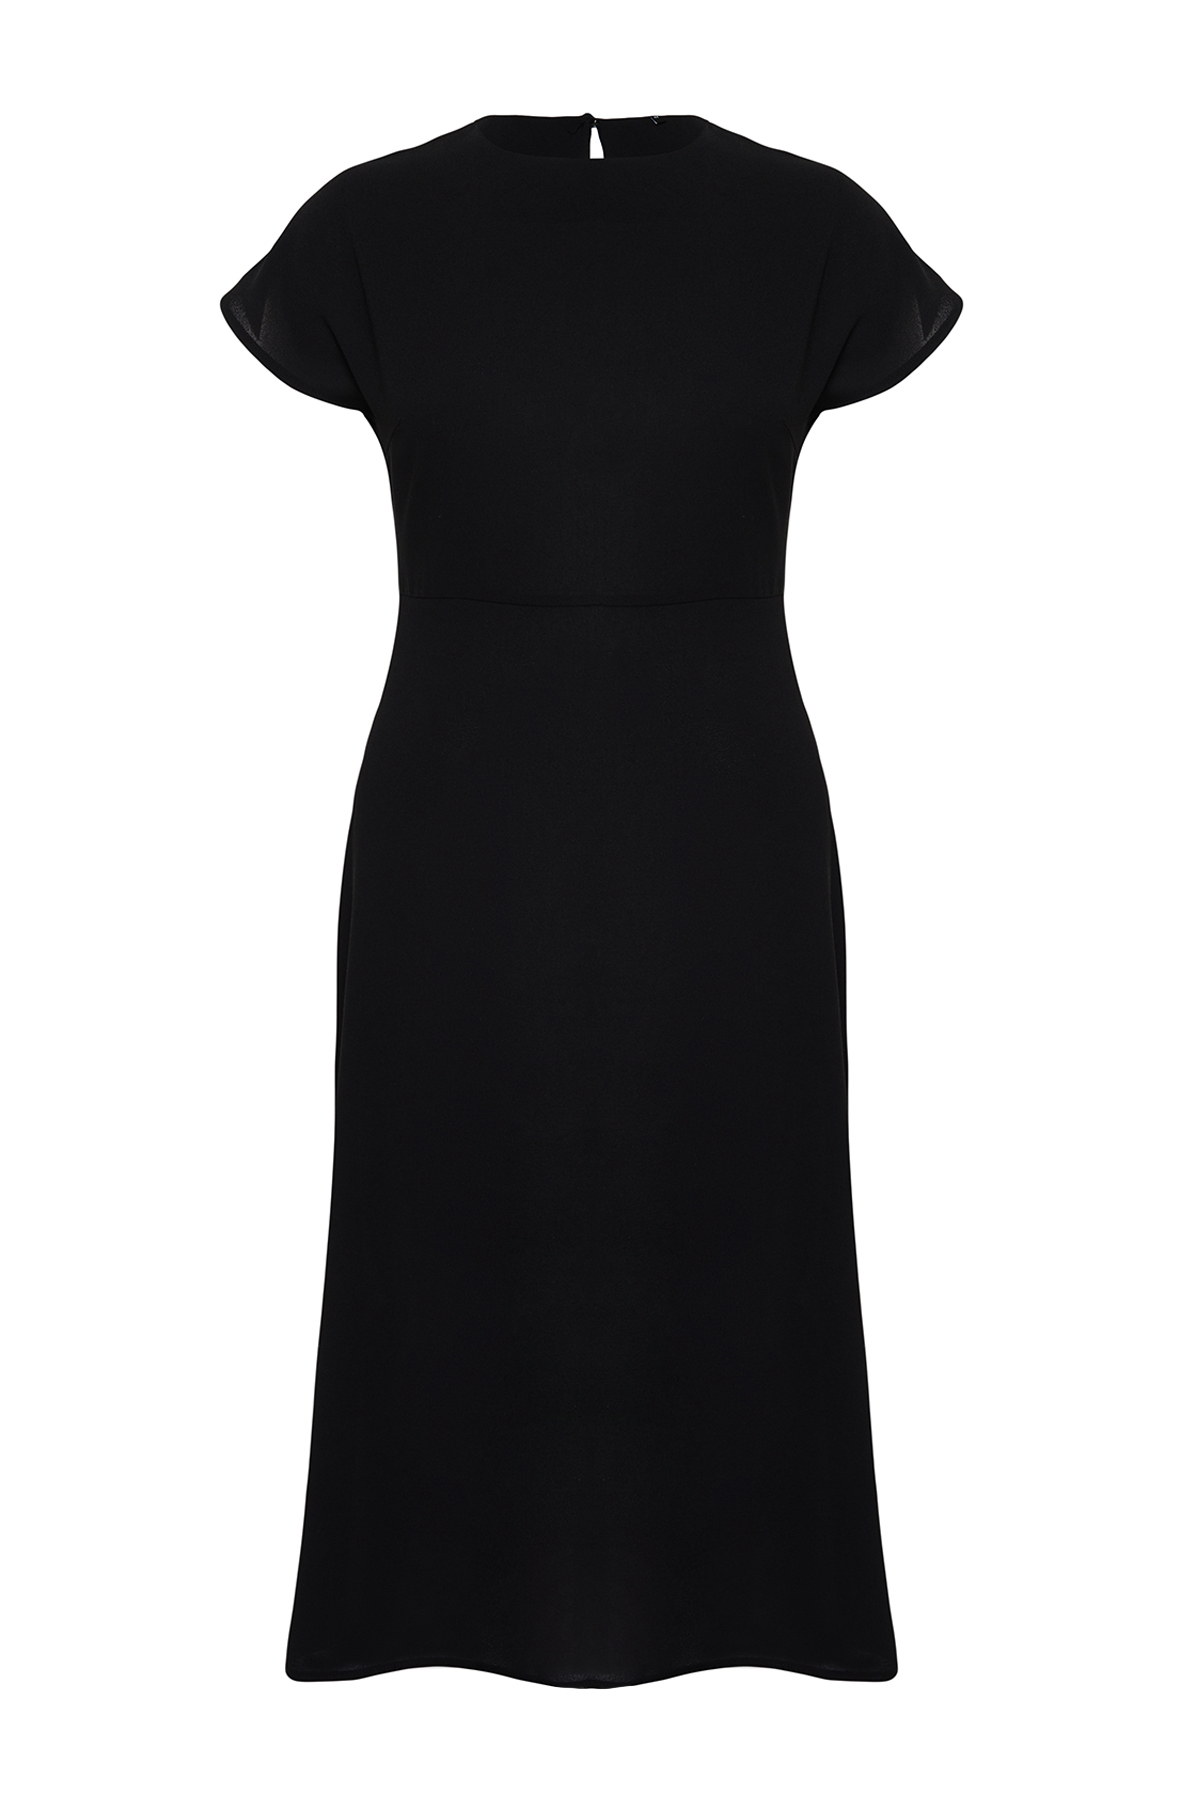 Trendyol Curve Black A-Line Maxi Woven Dress